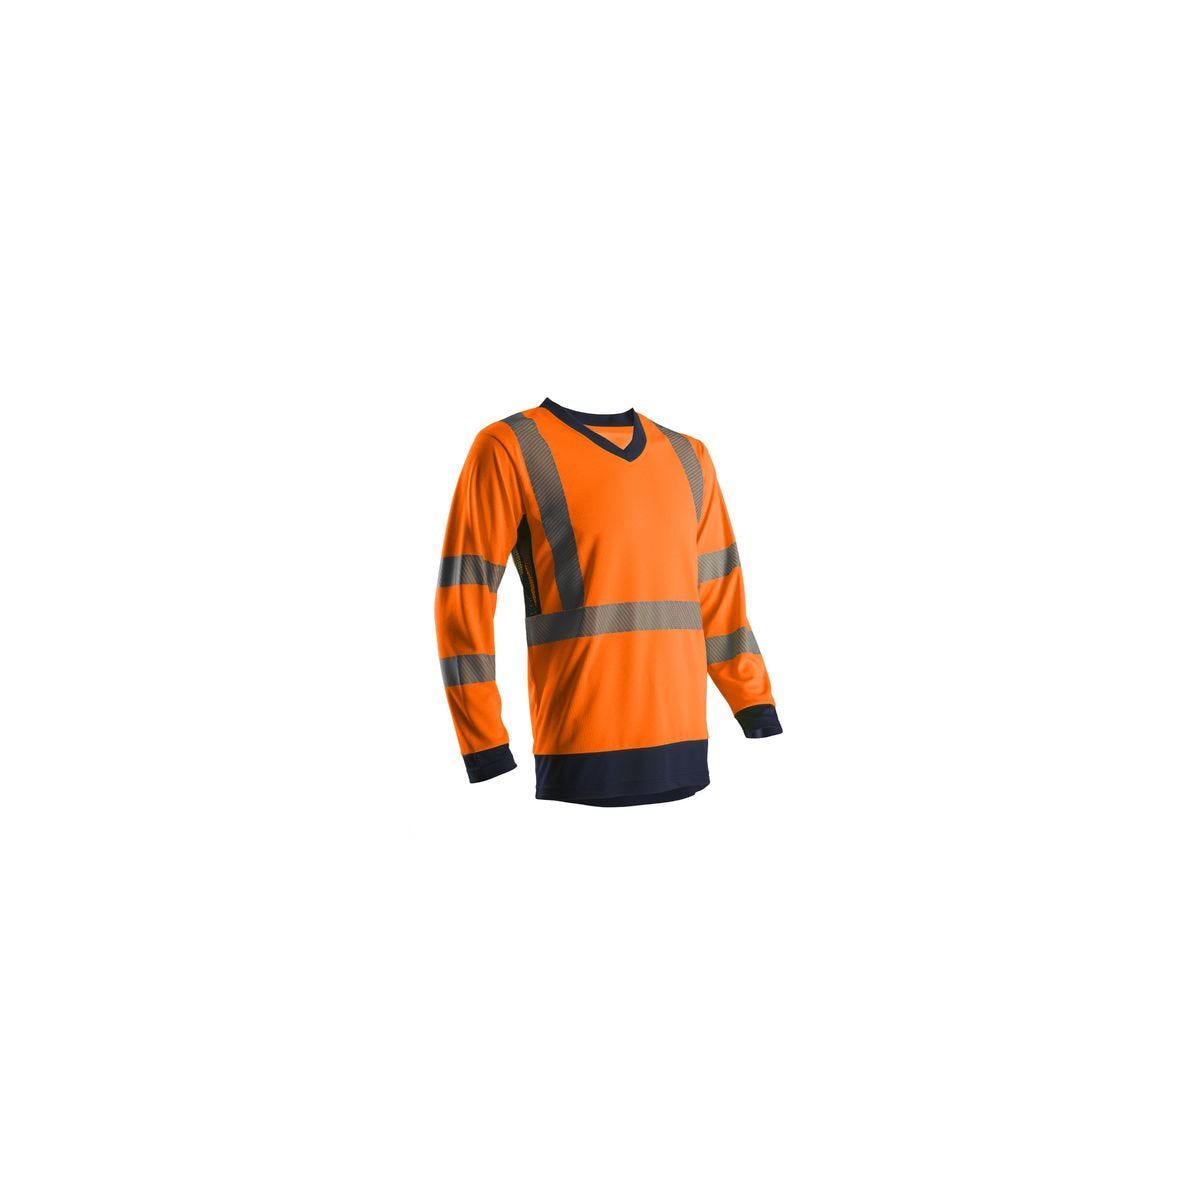 T-shirt SUNO ML orange HV/marine - COVERGUARD - Taille S 0